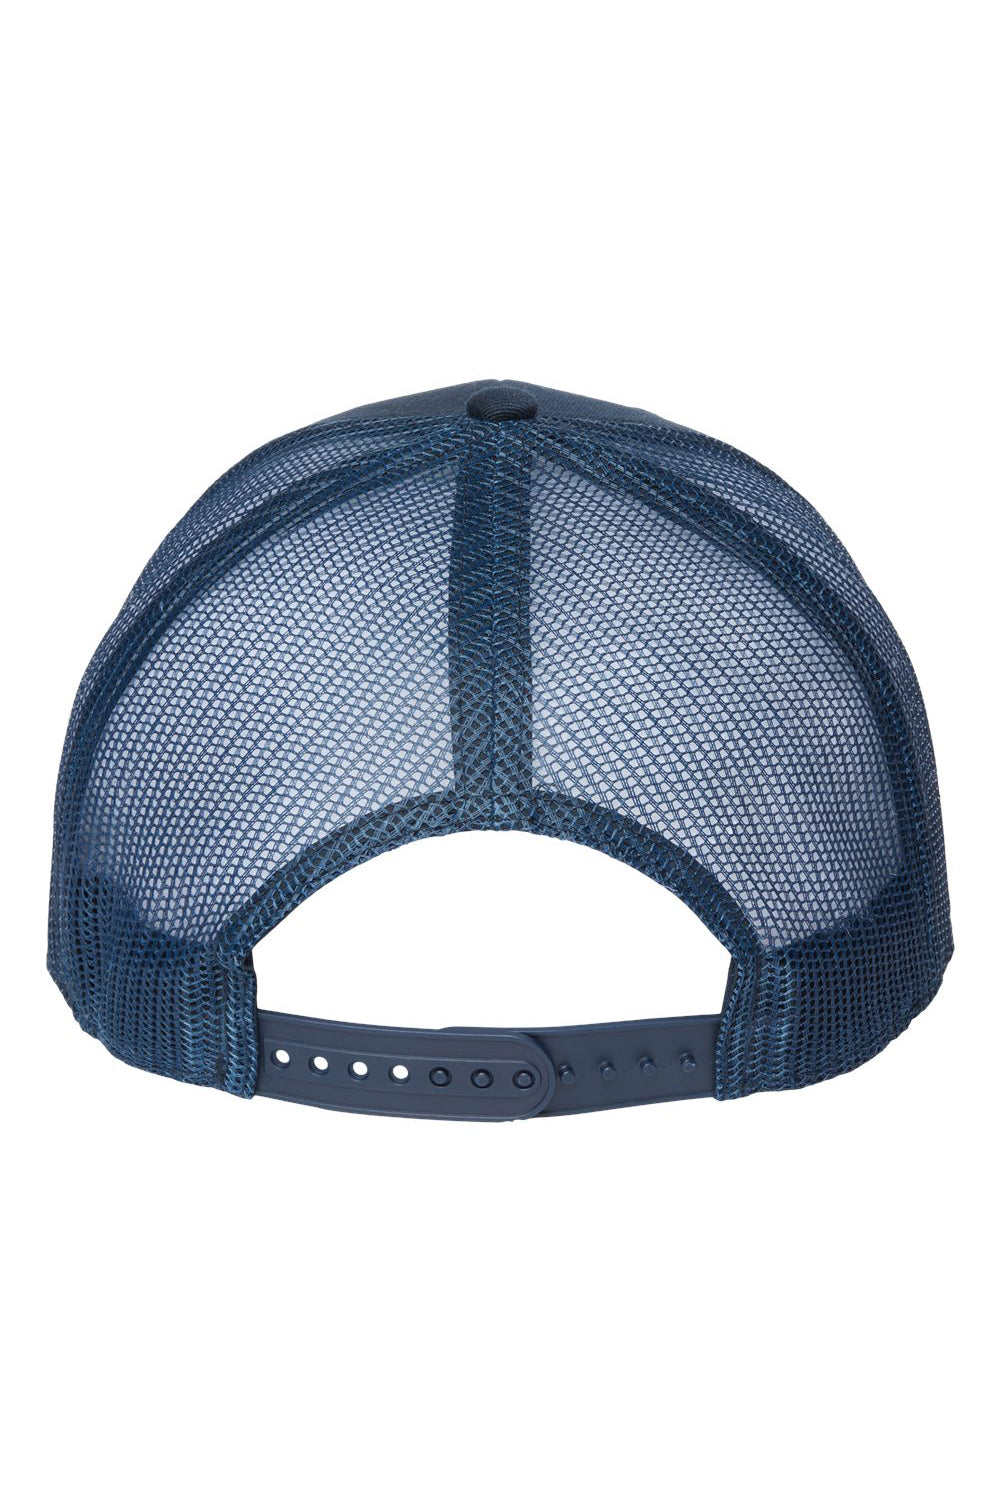 Atlantis Headwear BRYCE Mens Sustainable Snapback Trucker Hat Navy Blue/Navy Blue Flat Back